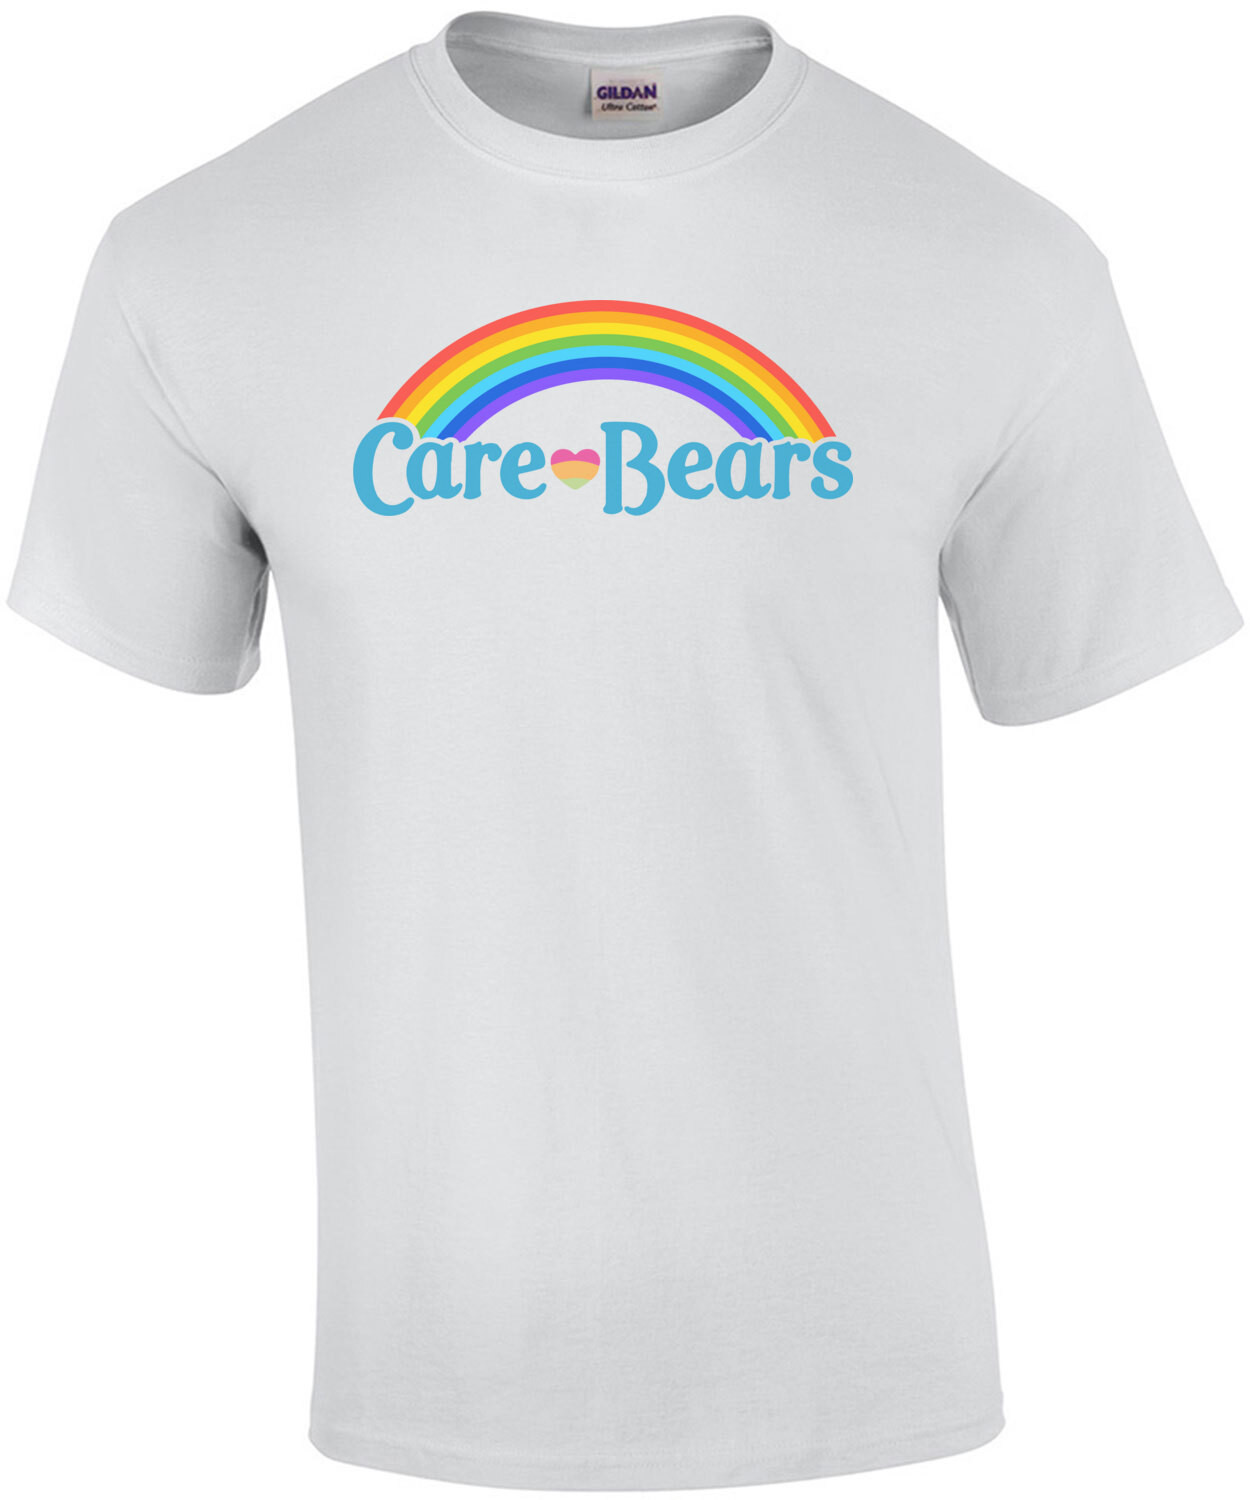 Care Bears - 80's T-Shirt